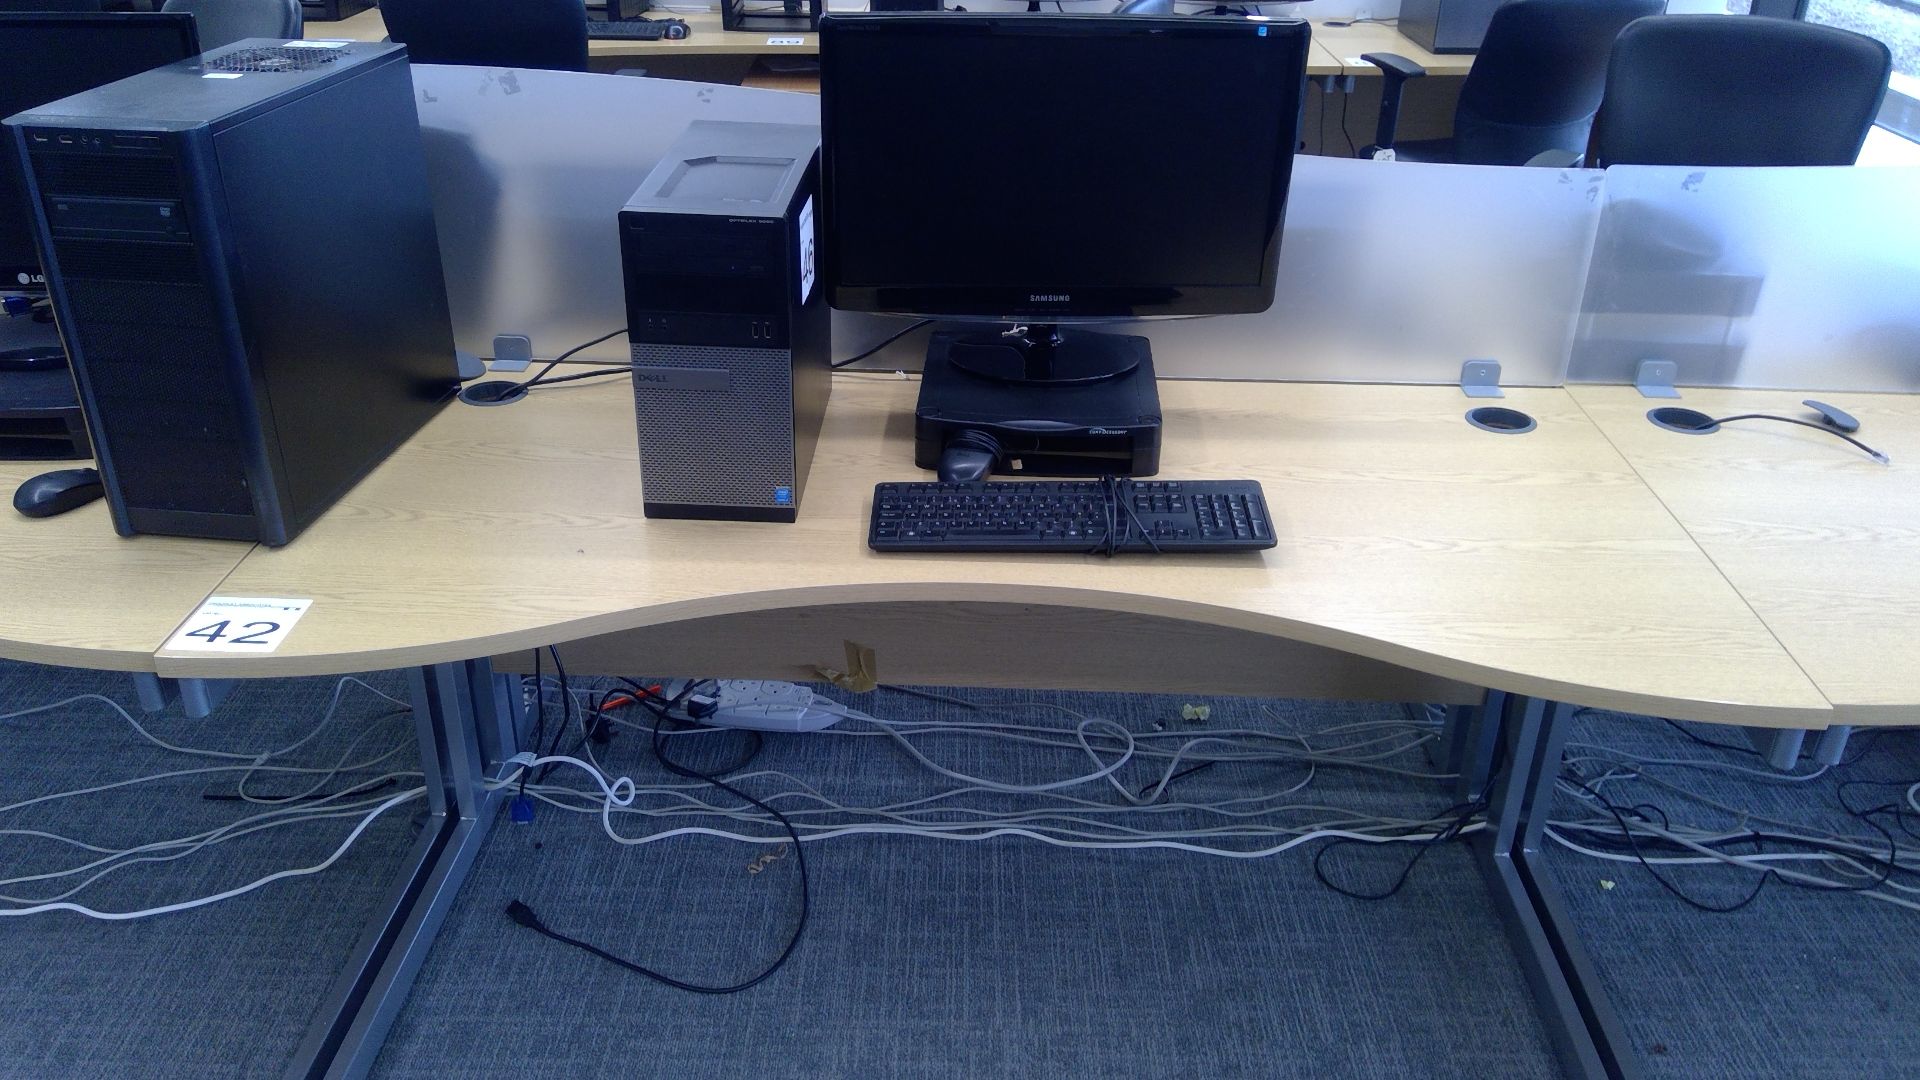 Oak effect ergonomic desk complete with opaque desk divider